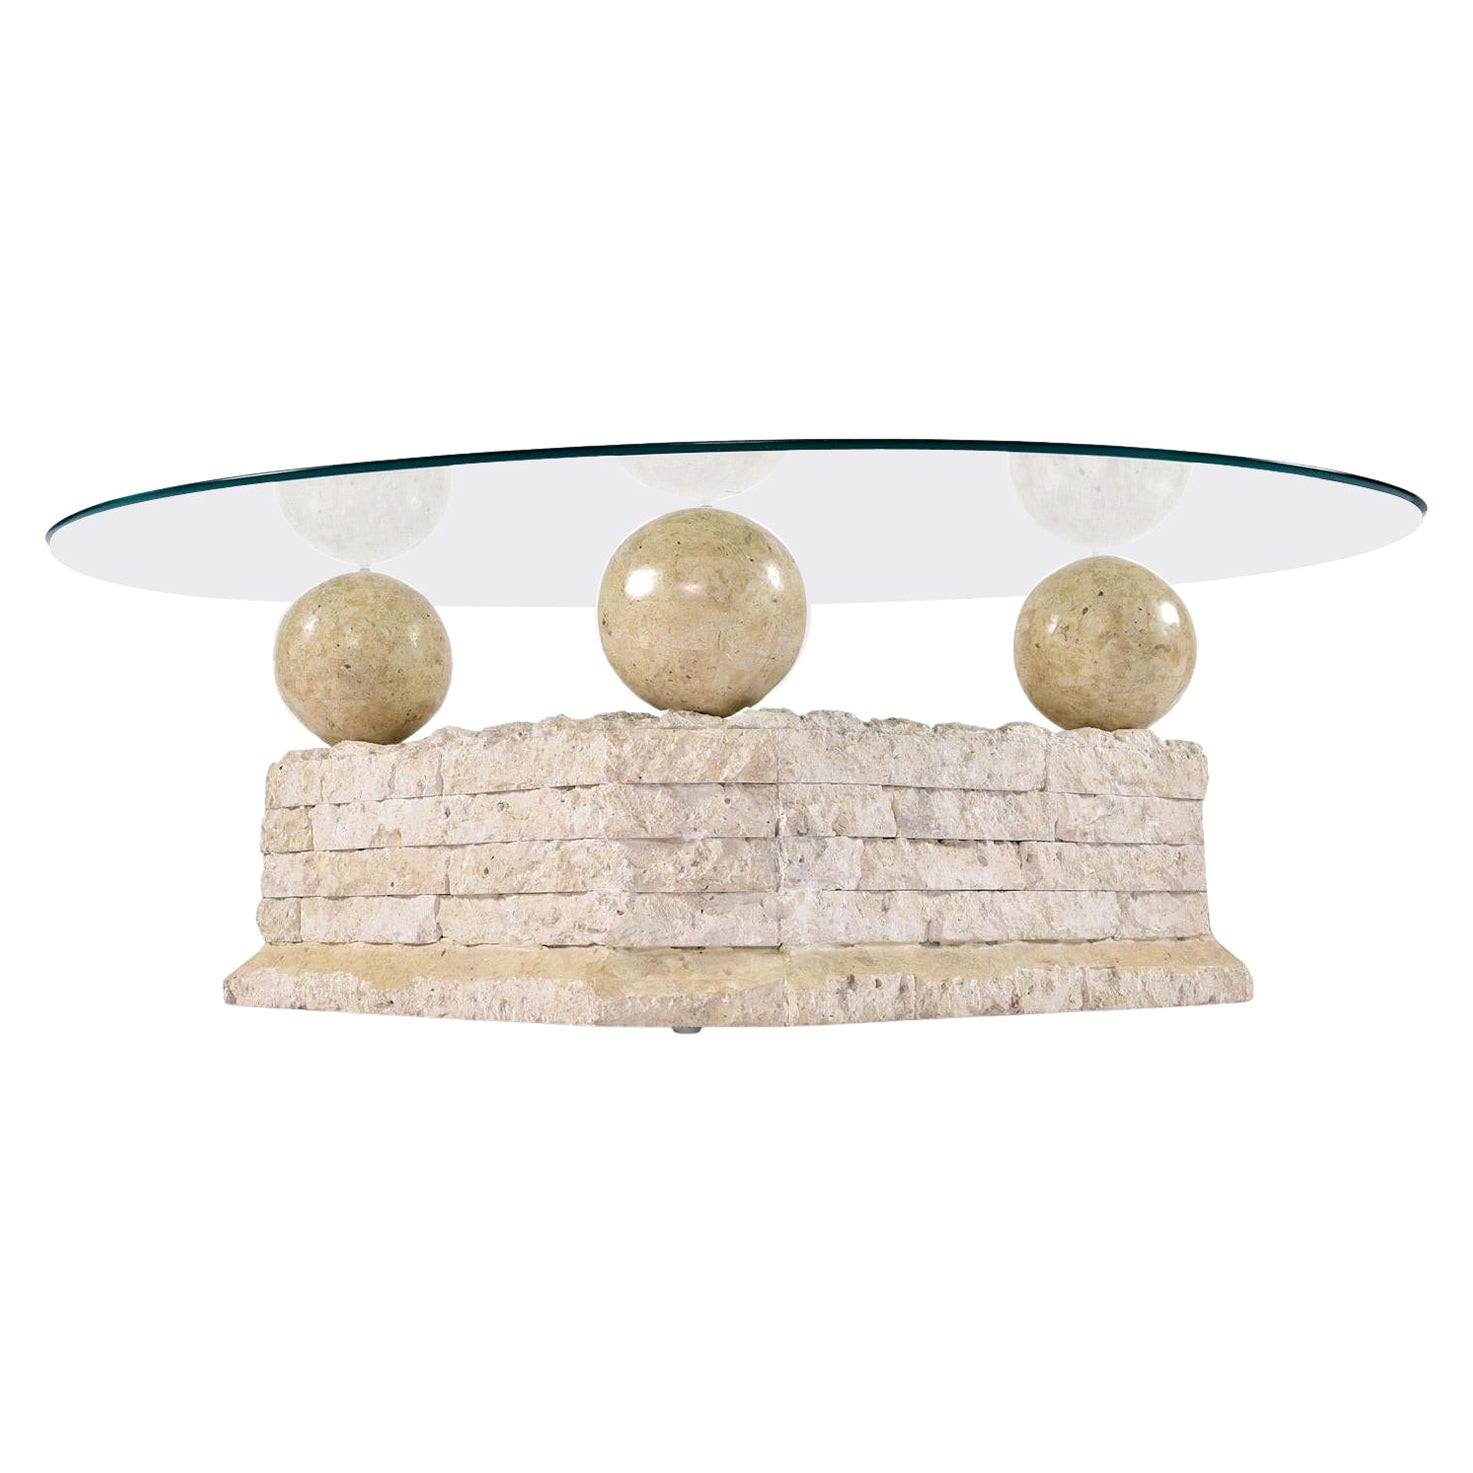 Maitland Smith Style Mactan Tessellated Stone Orb Pedestal Coffee Table